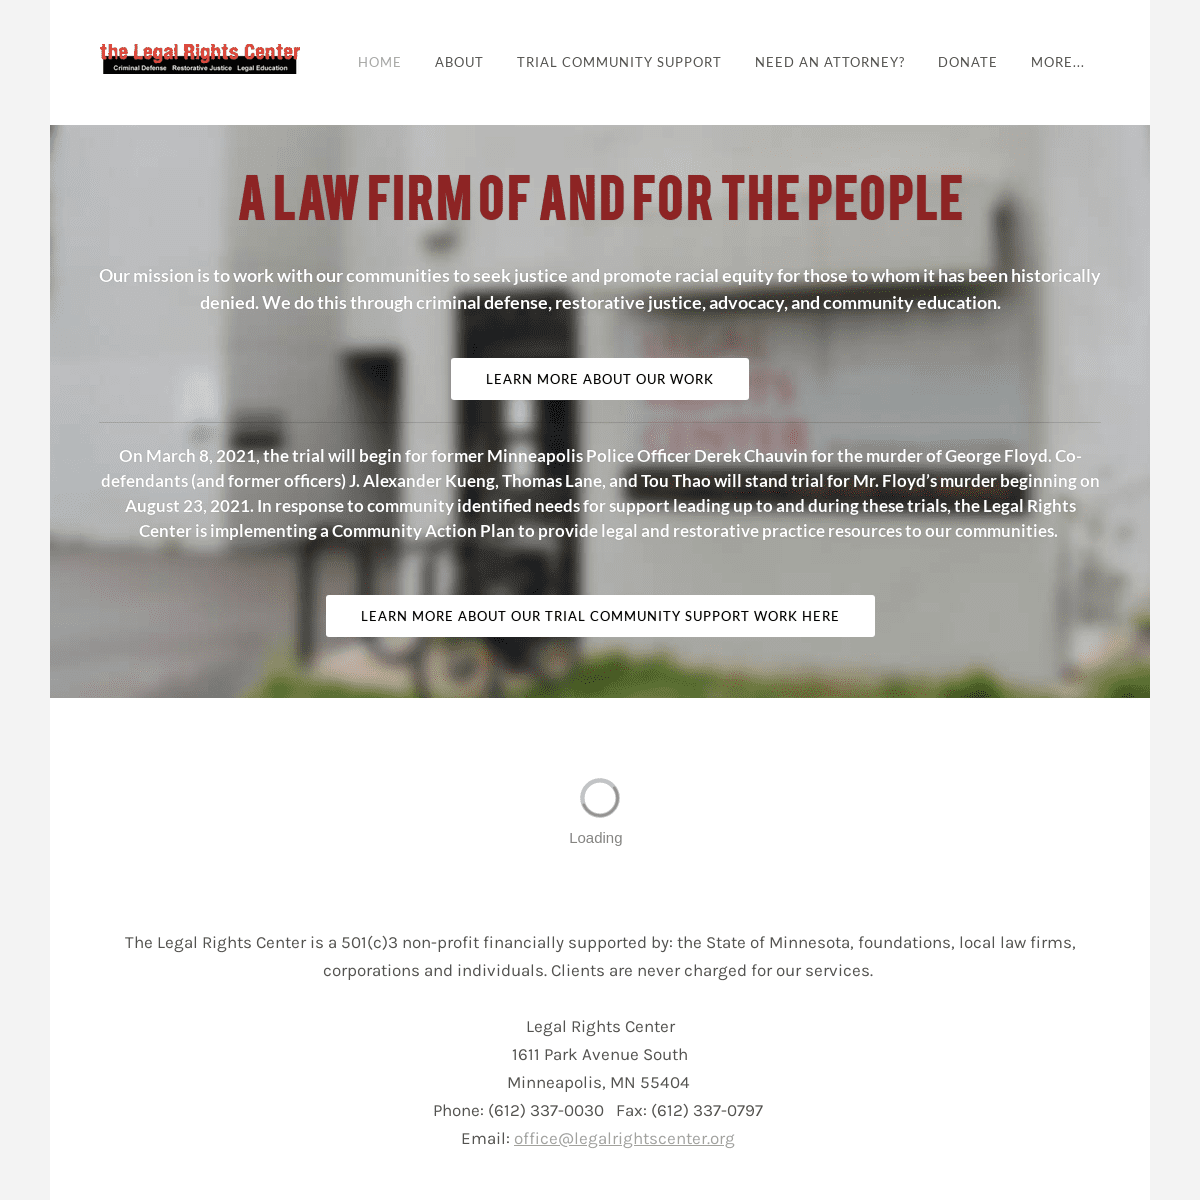 A complete backup of https://legalrightscenter.org